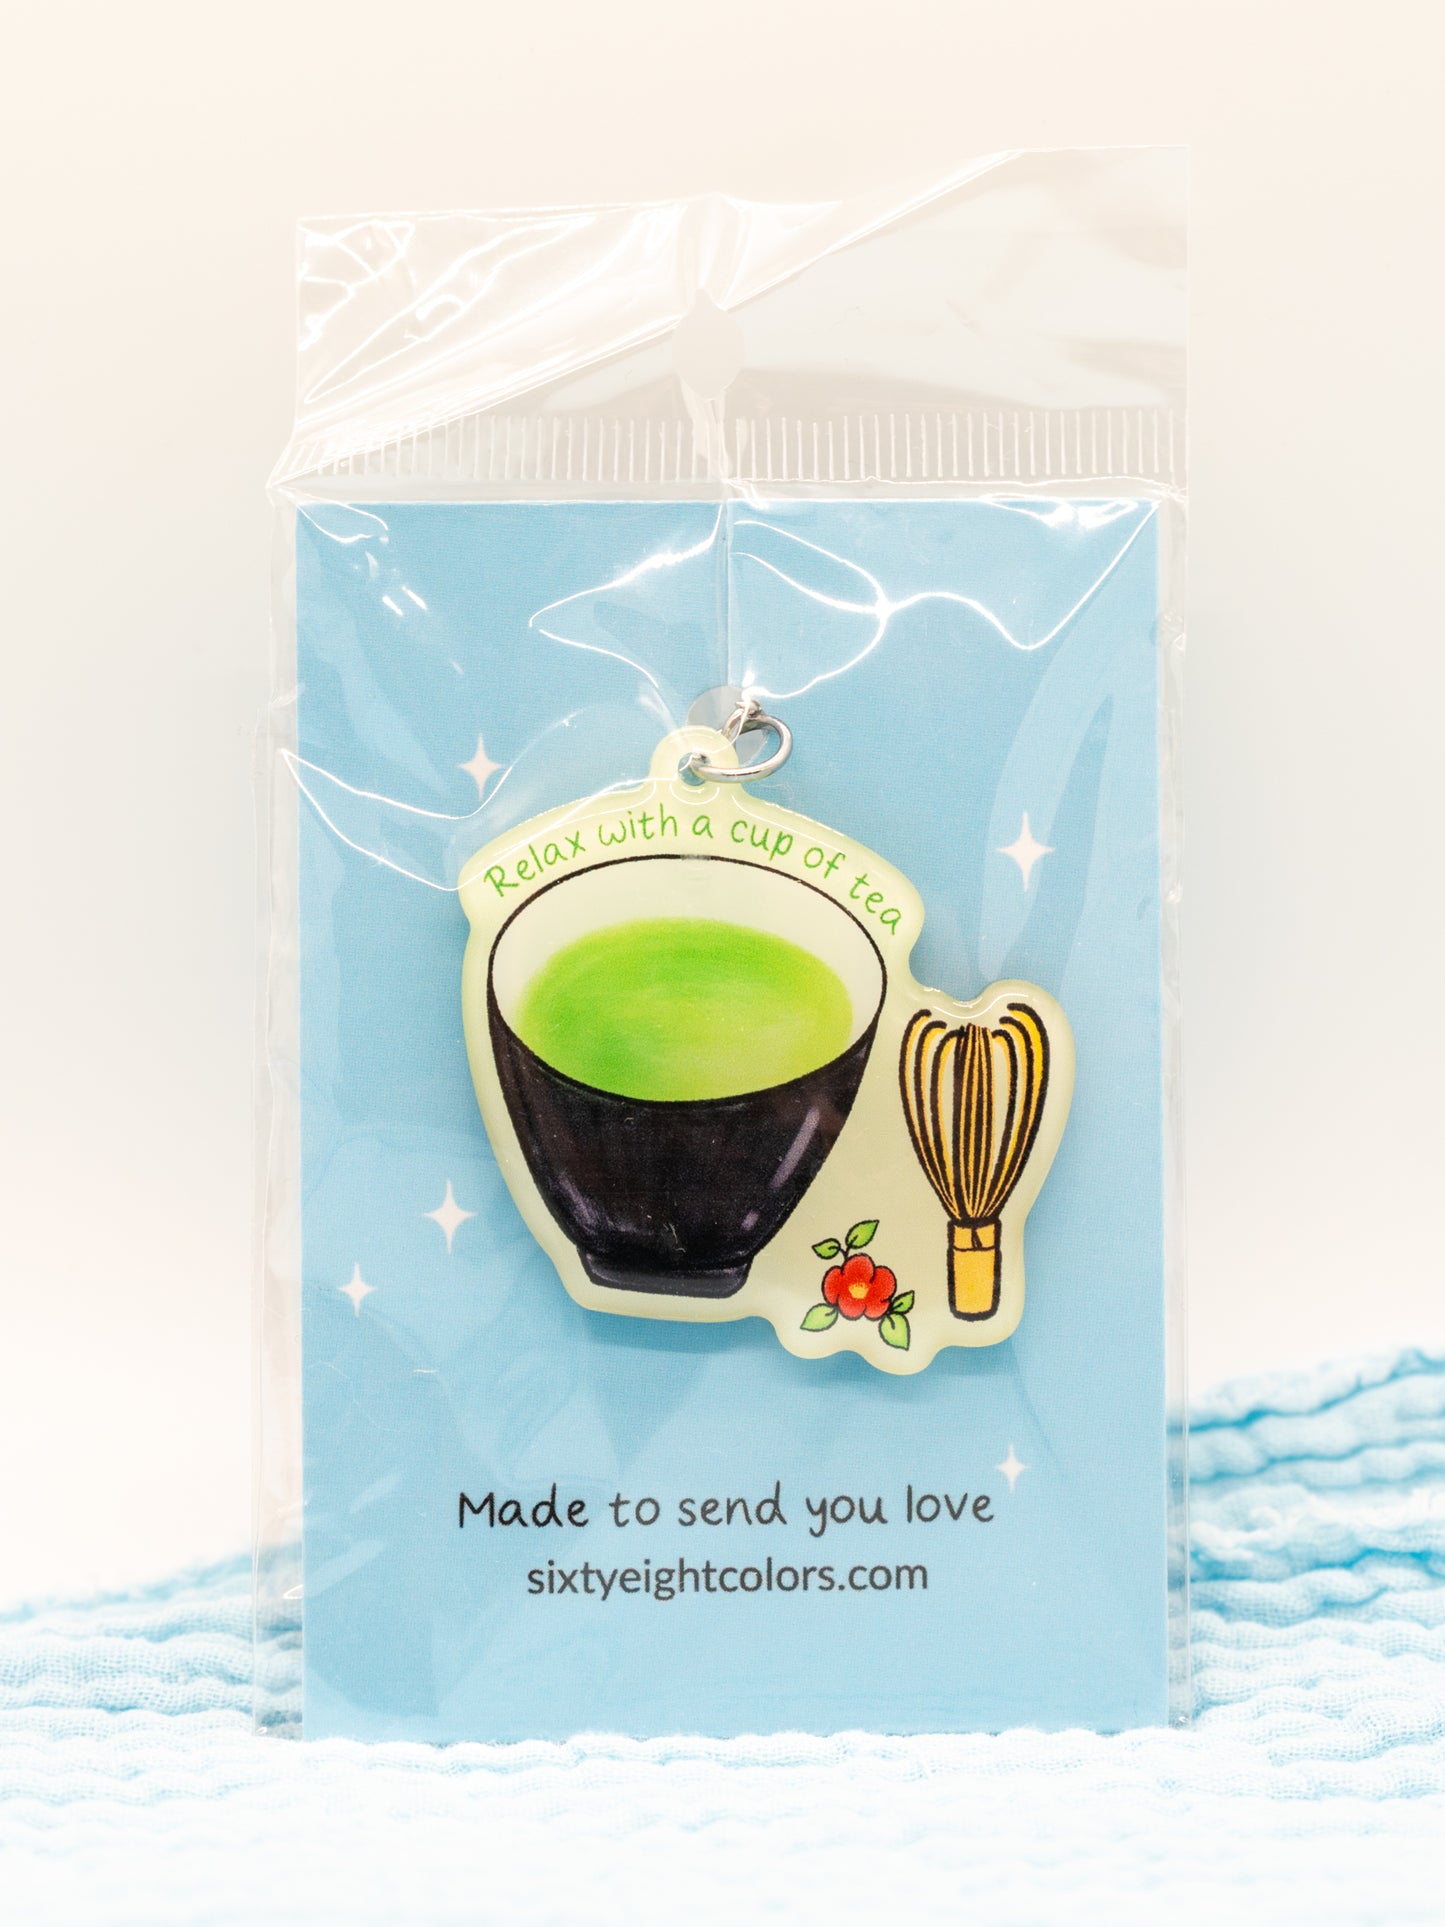 Relax Matcha Tea Keychain